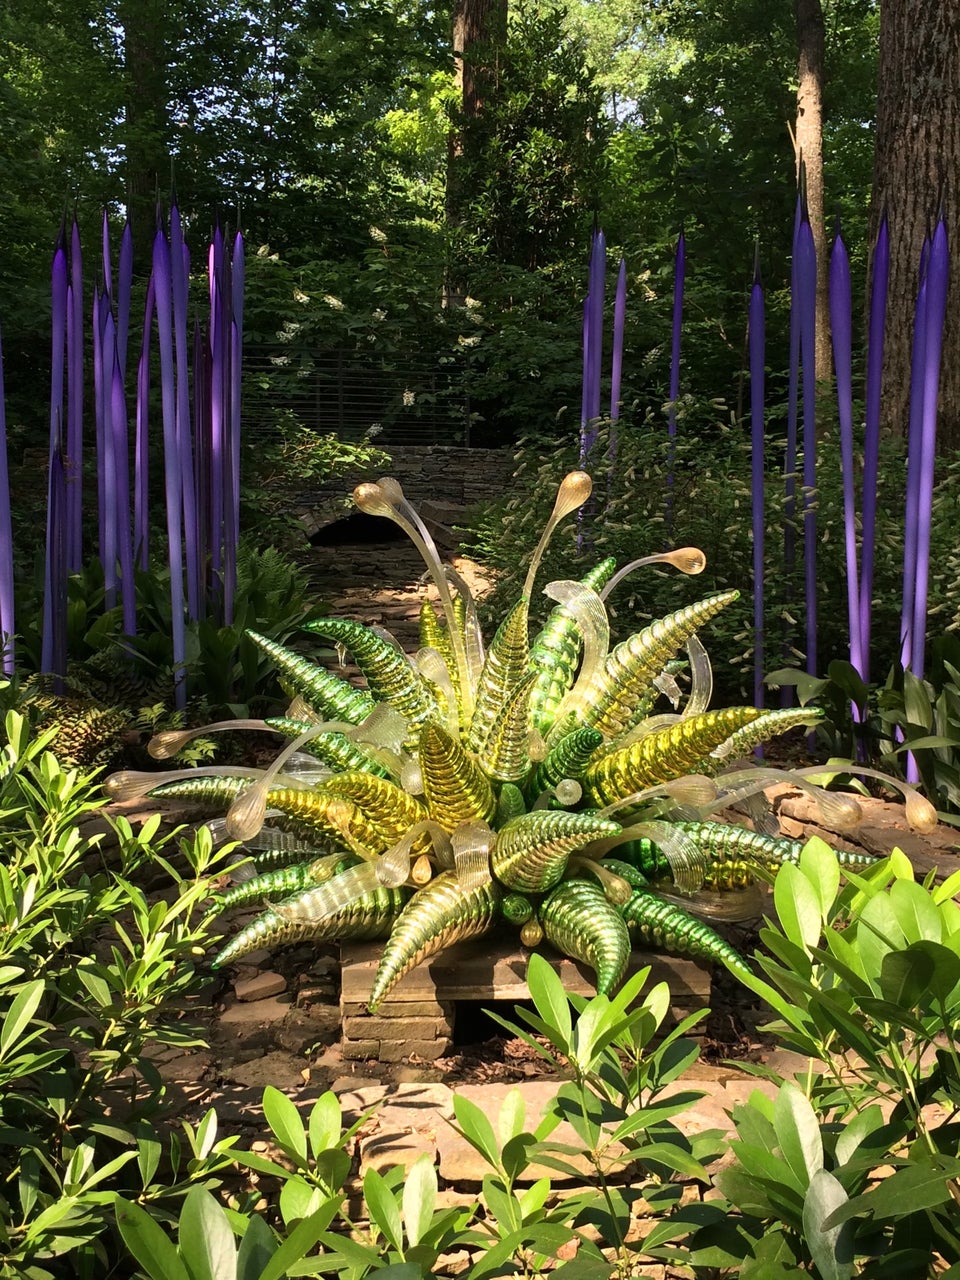 Photo of Atlanta Botanical Gardens